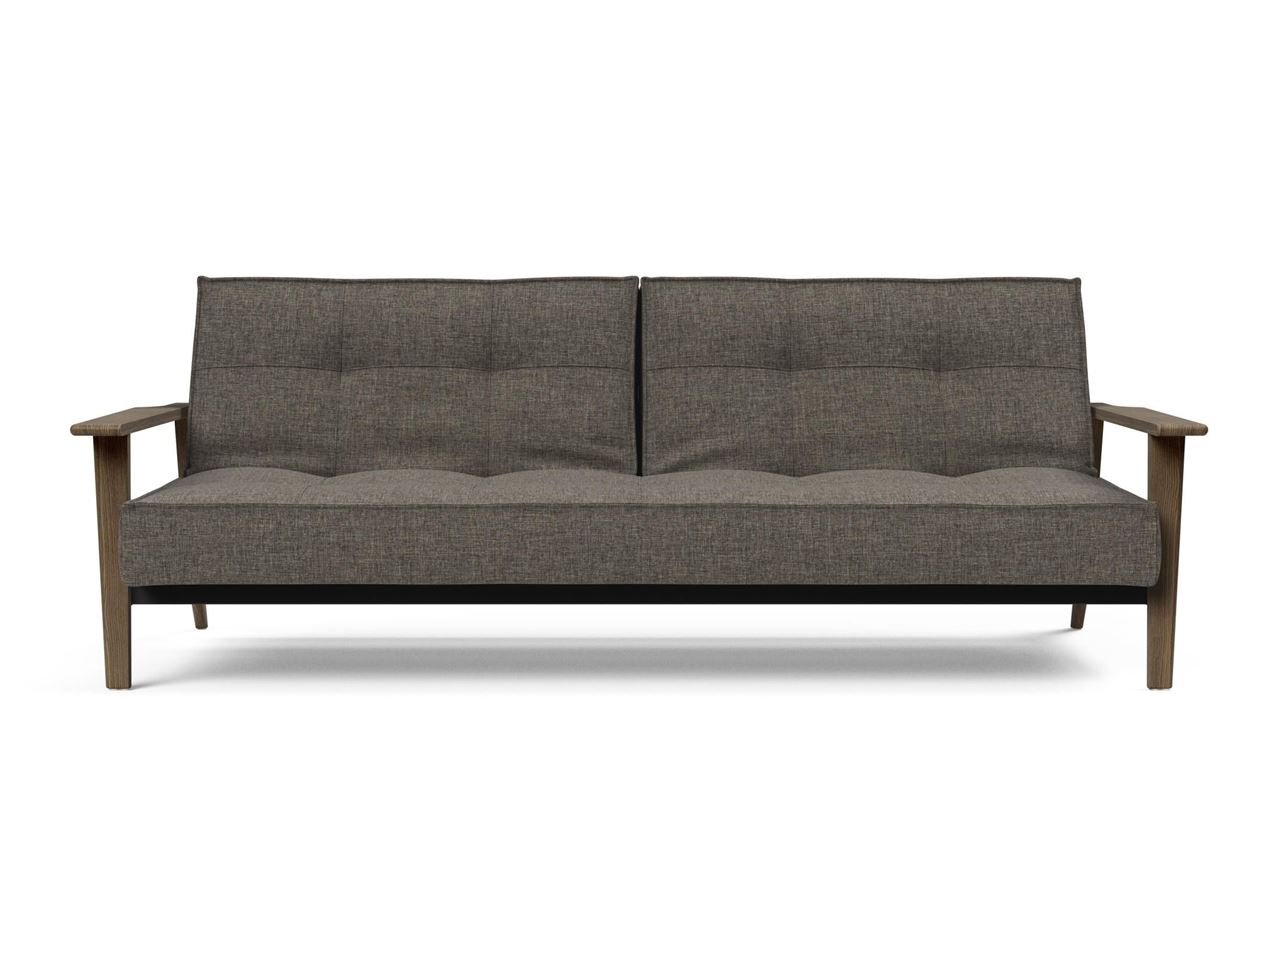 Billede af Innovation Living Splitback Frej Sofa Bed B: 232 cm - Smoked Oak/216 Flashtex Dark Grey